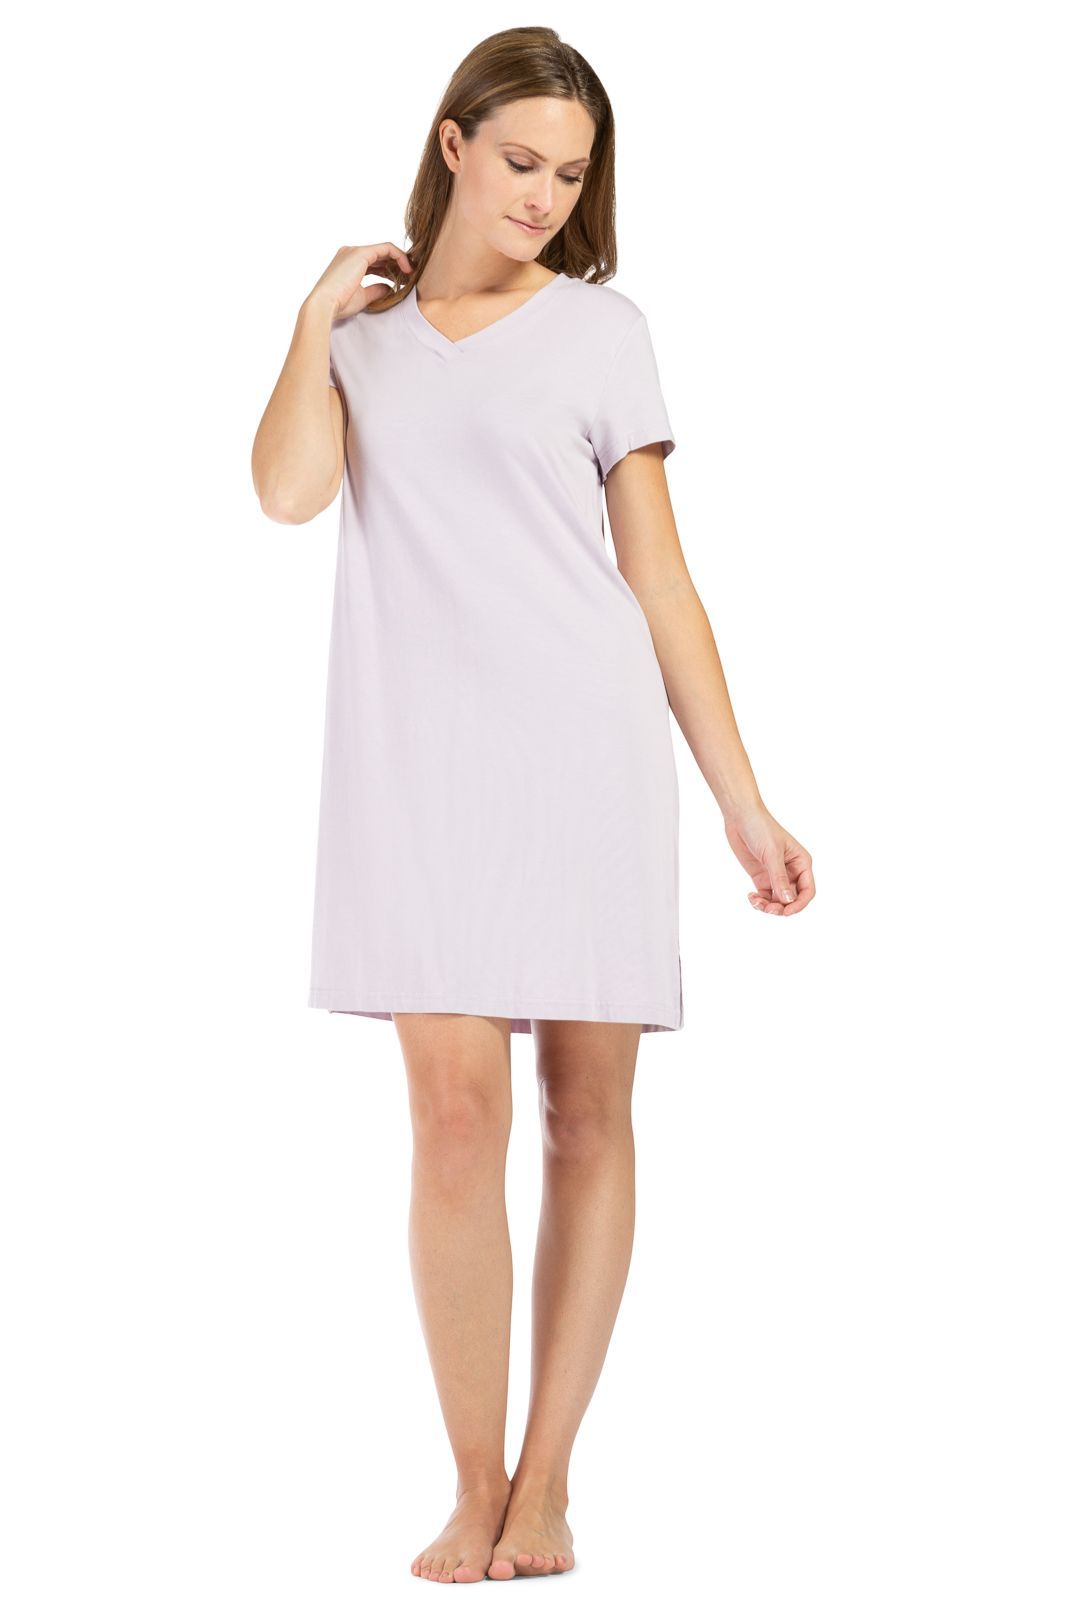 Women's Nightgown, Organic Cotton Women's Nightshirt